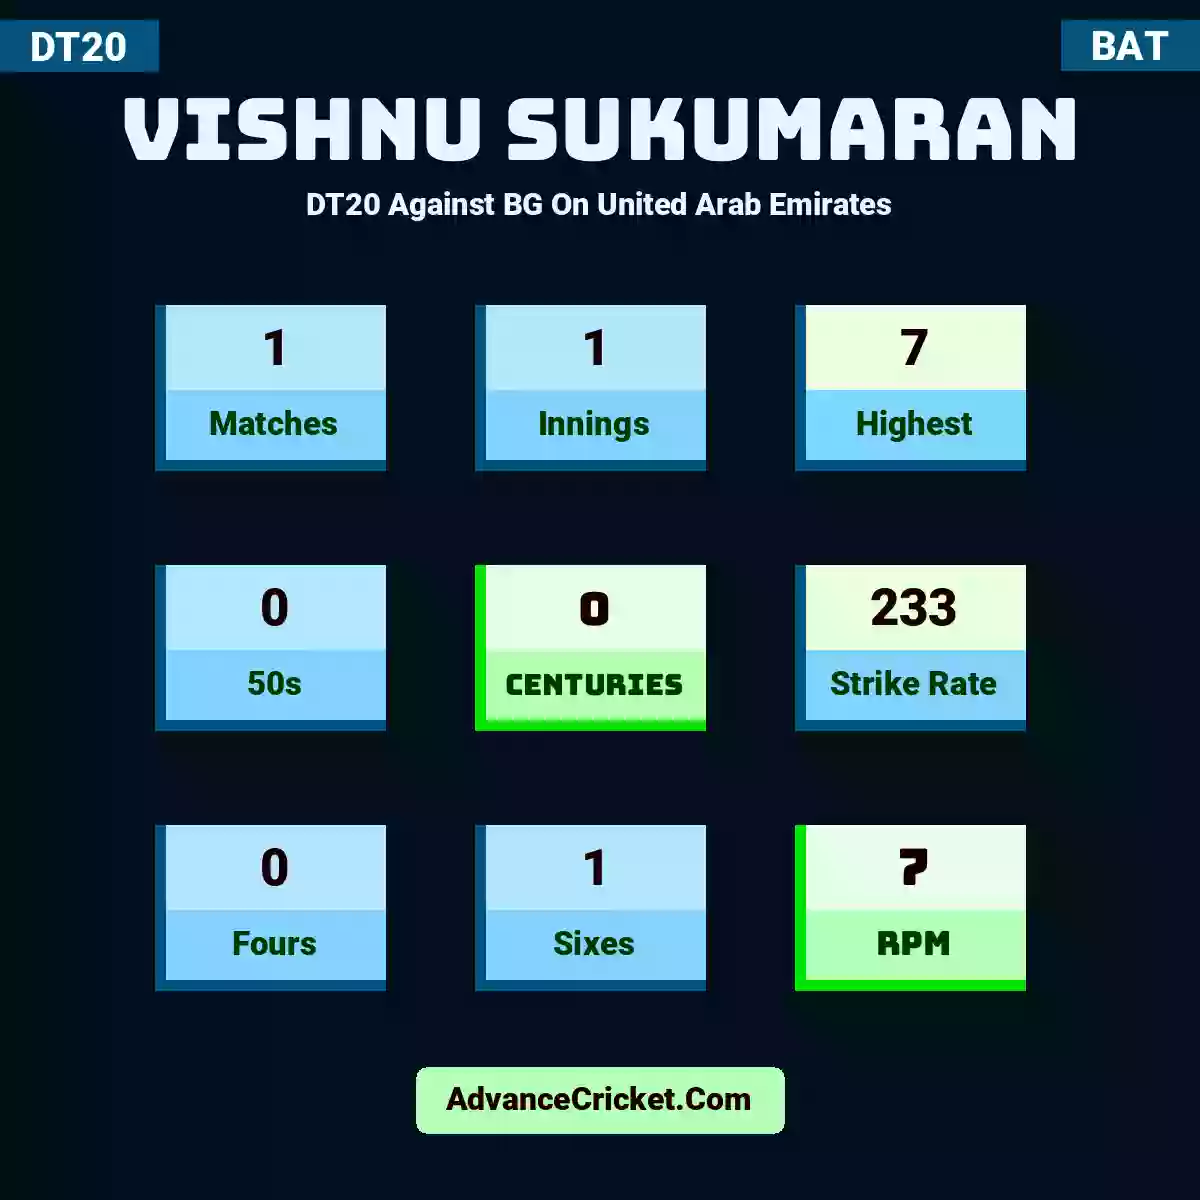 Vishnu Sukumaran DT20  Against BG On United Arab Emirates, Vishnu Sukumaran played 1 matches, scored 7 runs as highest, 0 half-centuries, and 0 centuries, with a strike rate of 233. V.Sukumaran hit 0 fours and 1 sixes, with an RPM of 7.